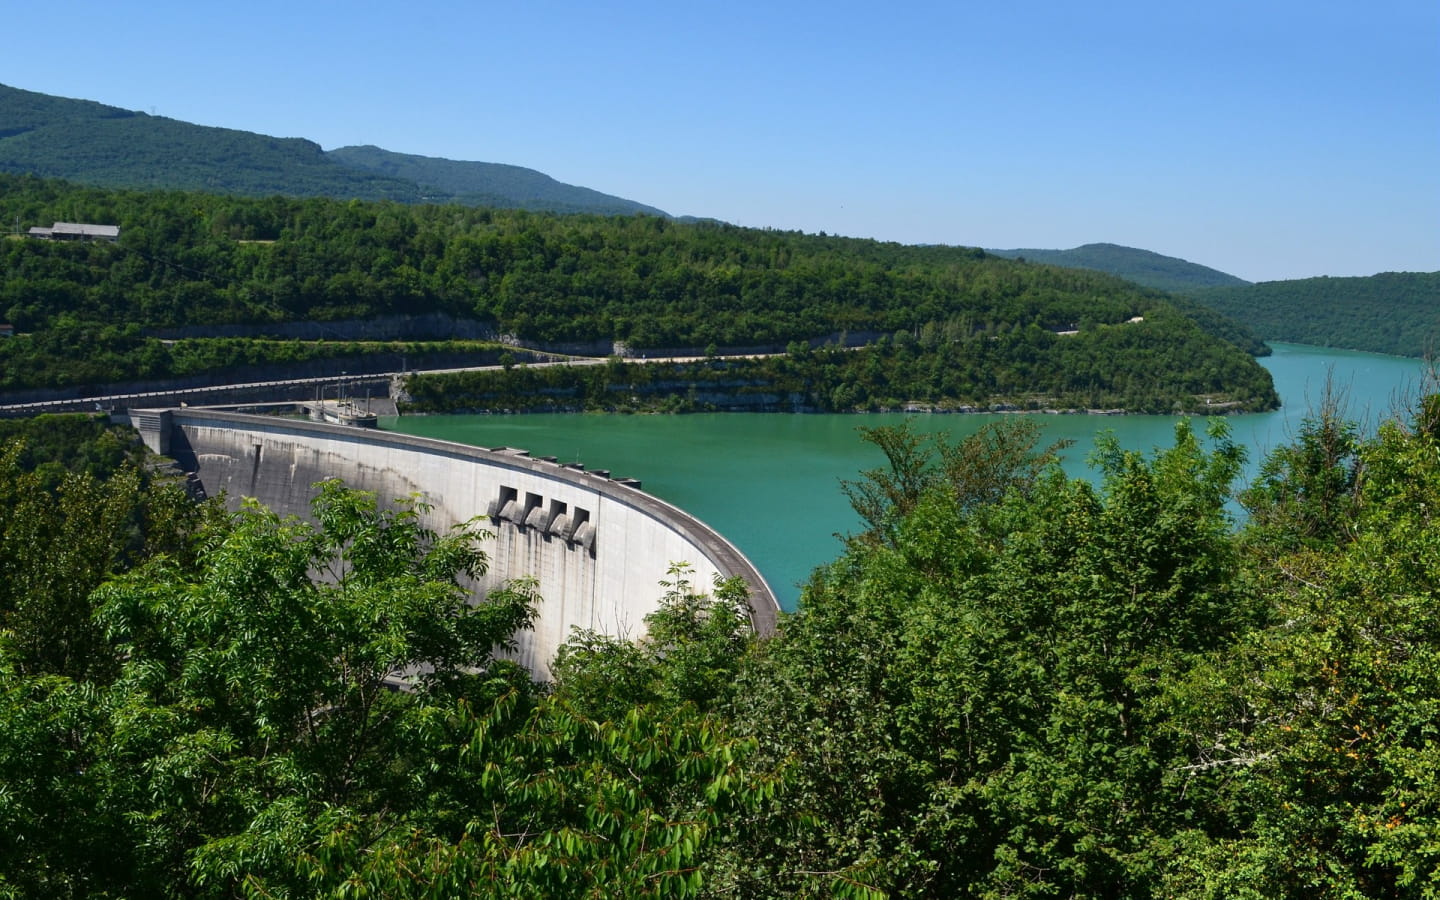 Vouglans Lake and its dam